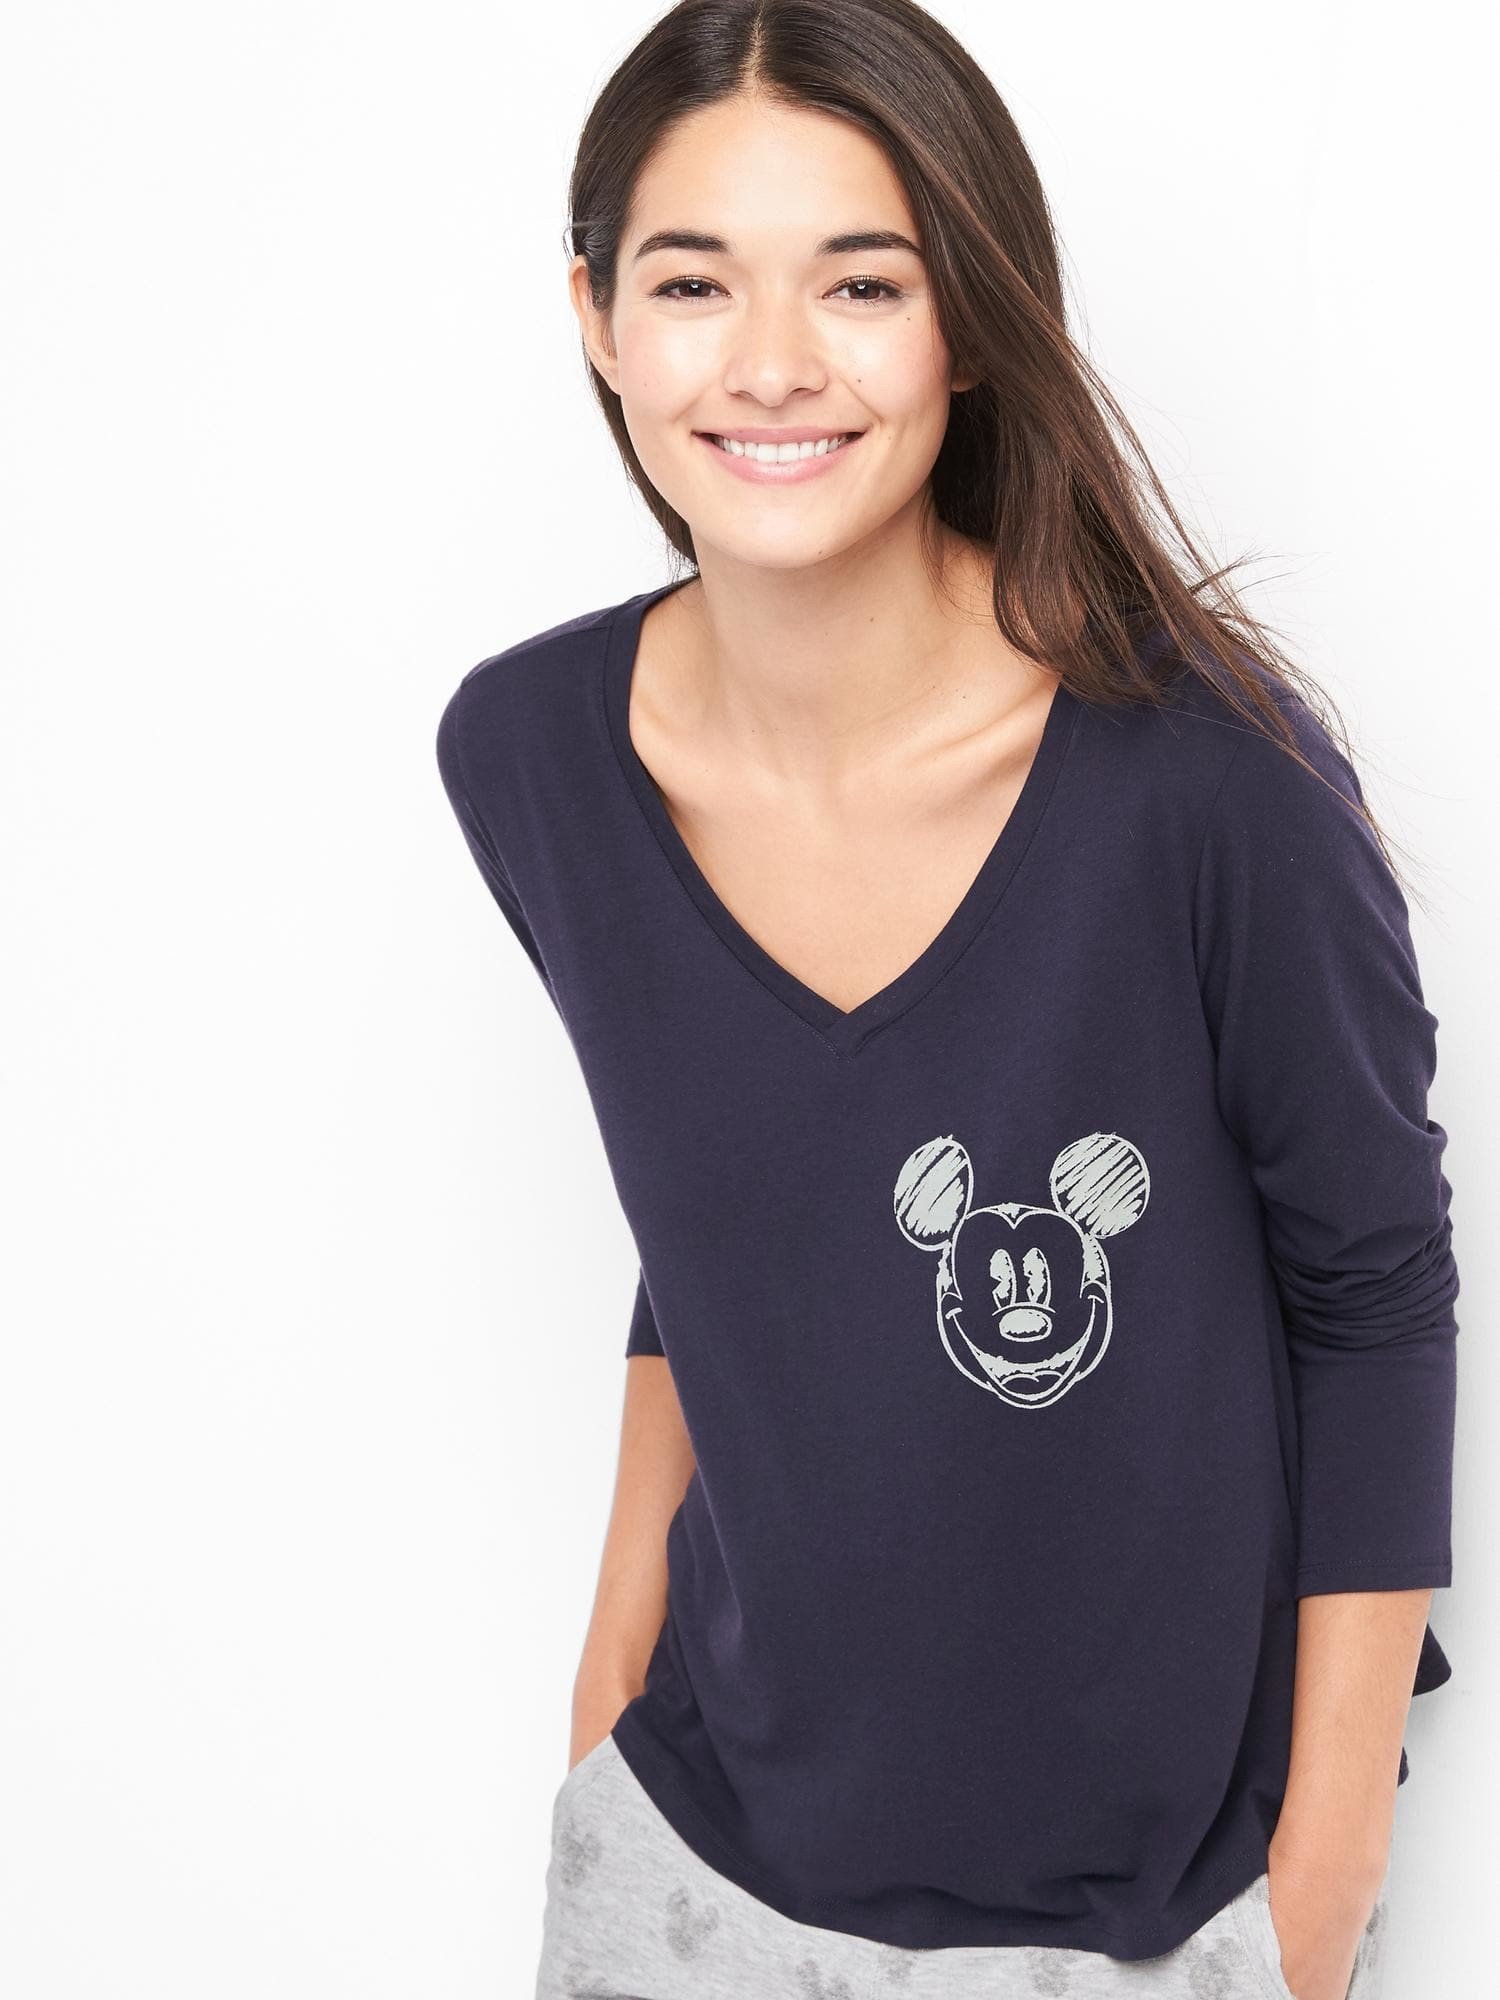 Gap | Disney t-shirt product image